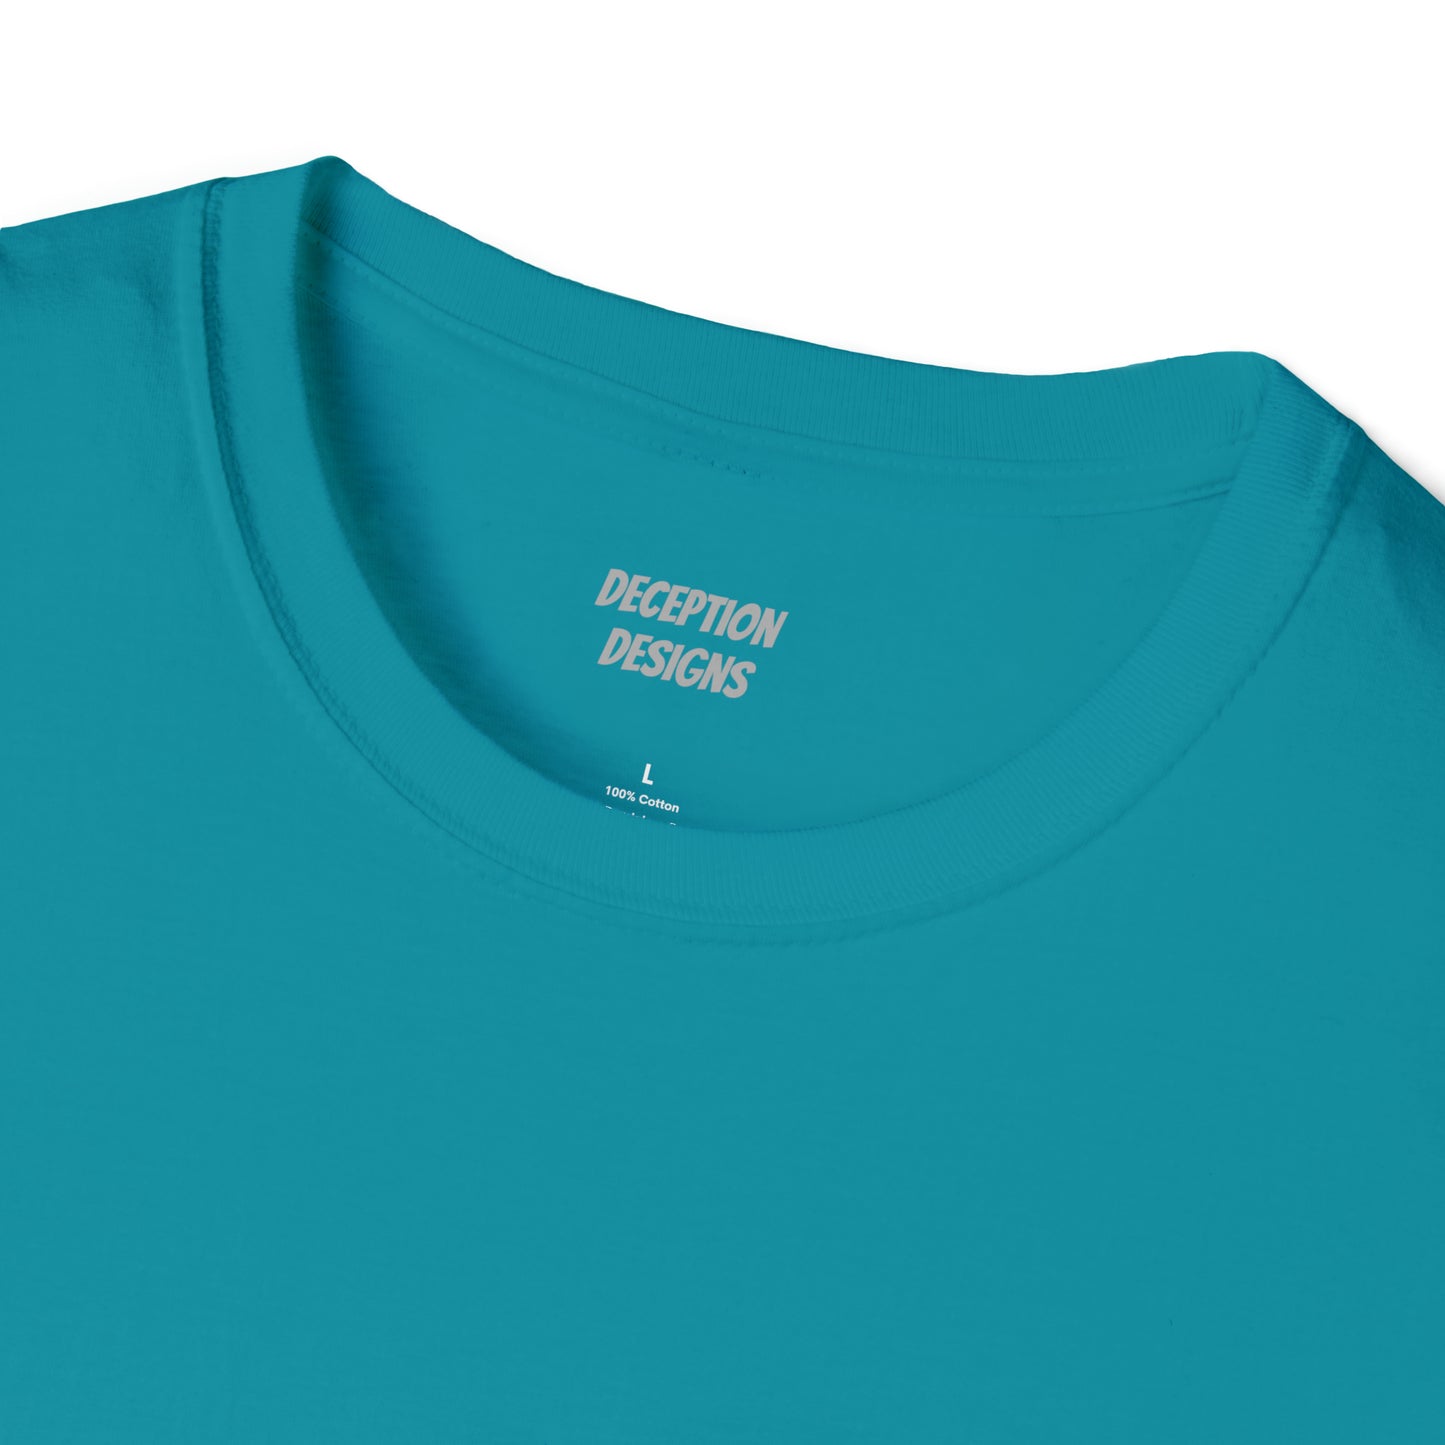 ANACORTES CRAB/ANCHOR Unisex Softstyle T-Shirt